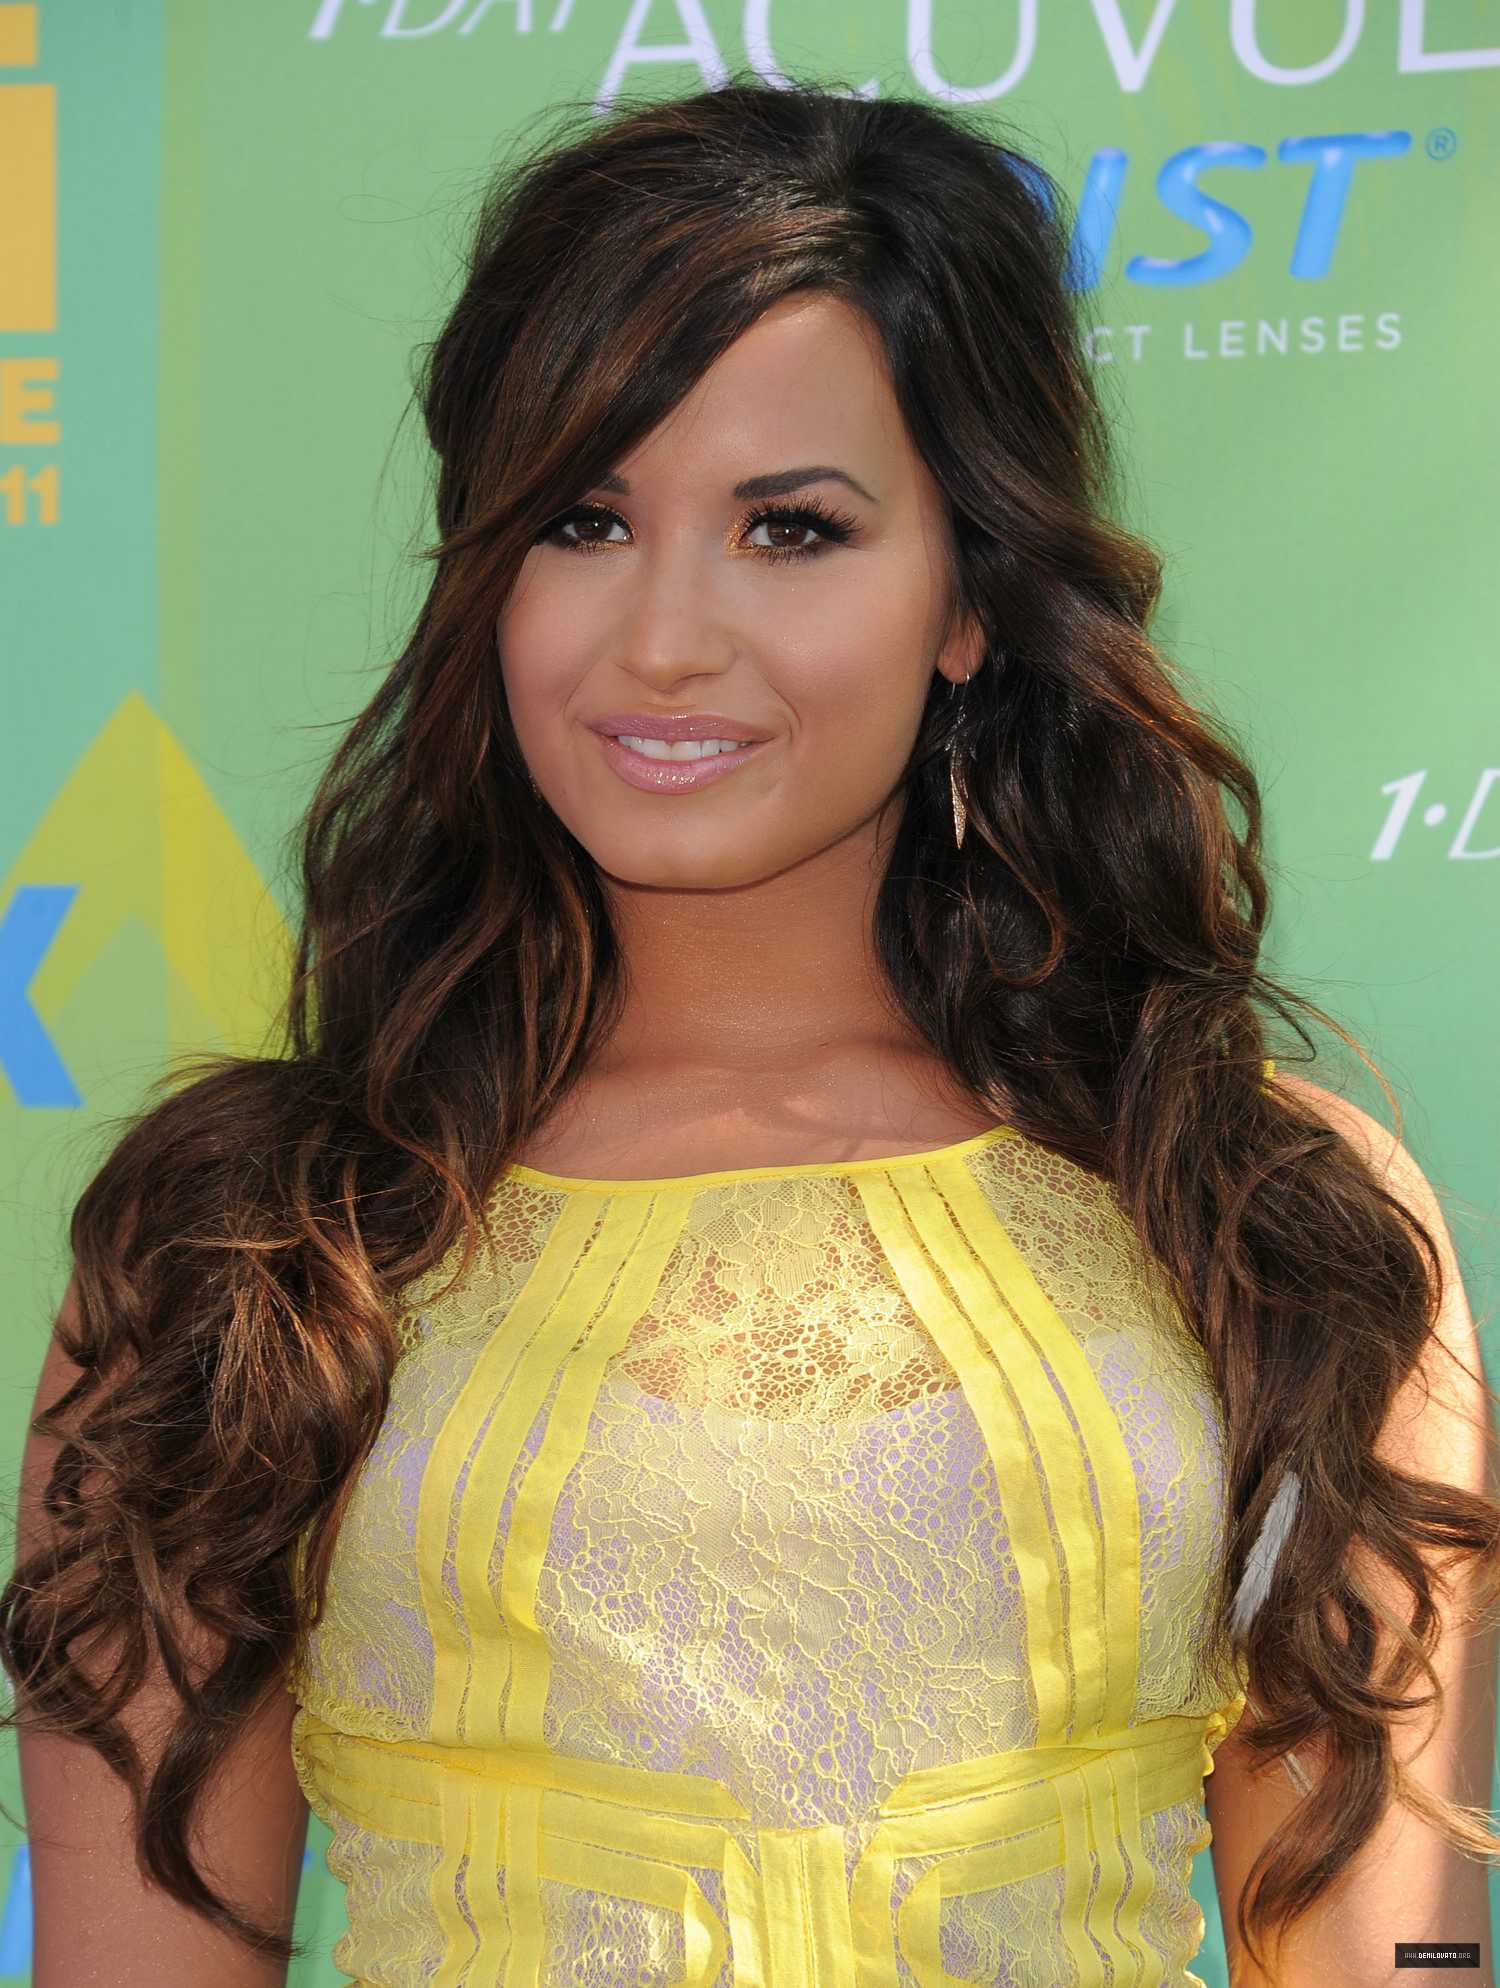 Demi Lovato in Teen Choice Awards 2011